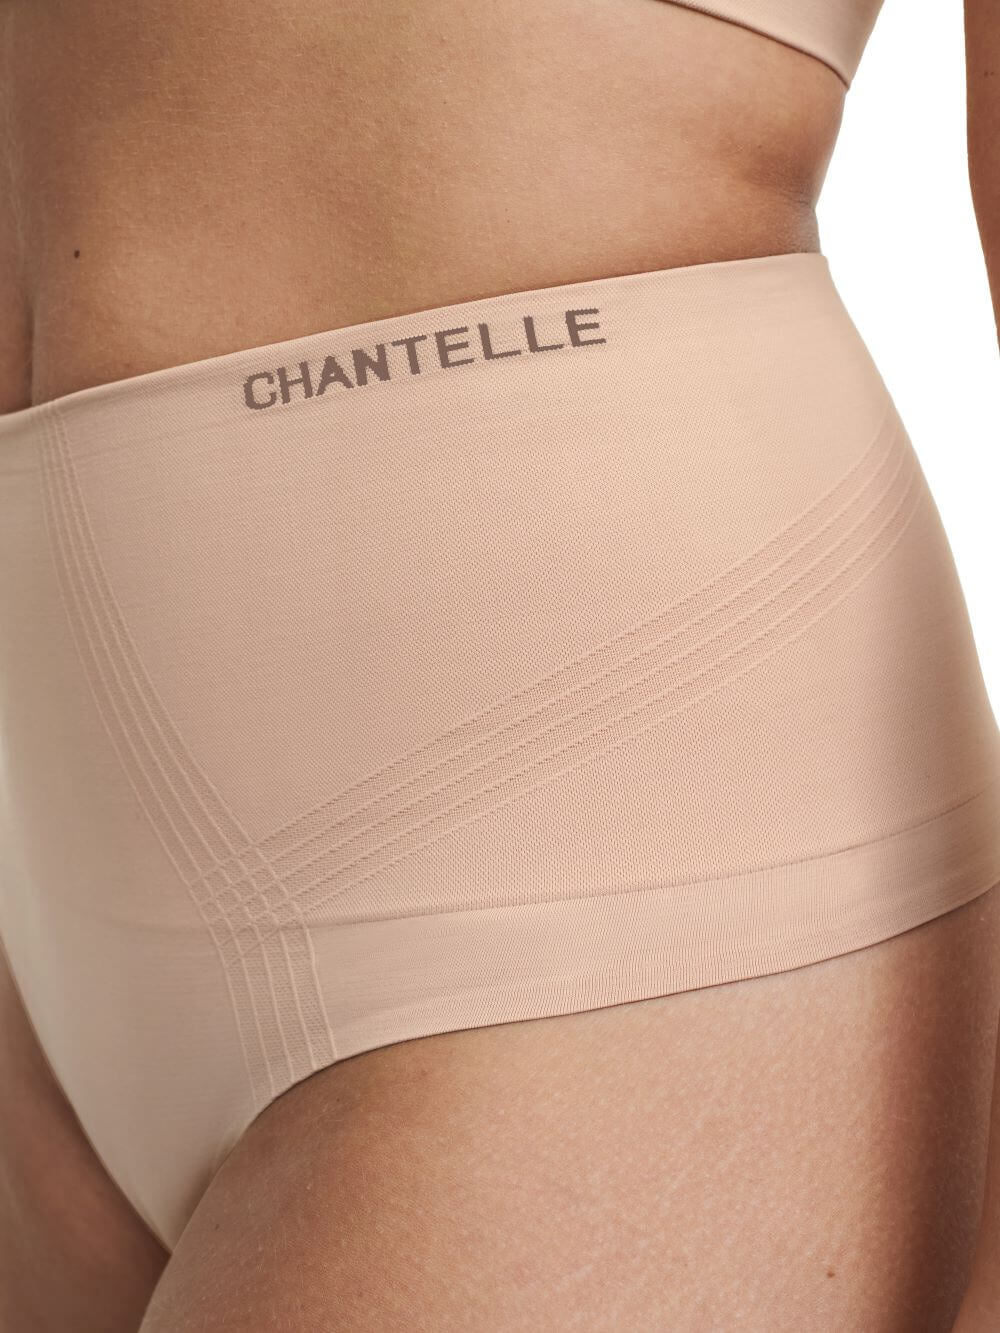 Chantelle - Smooth Comfort Hud.